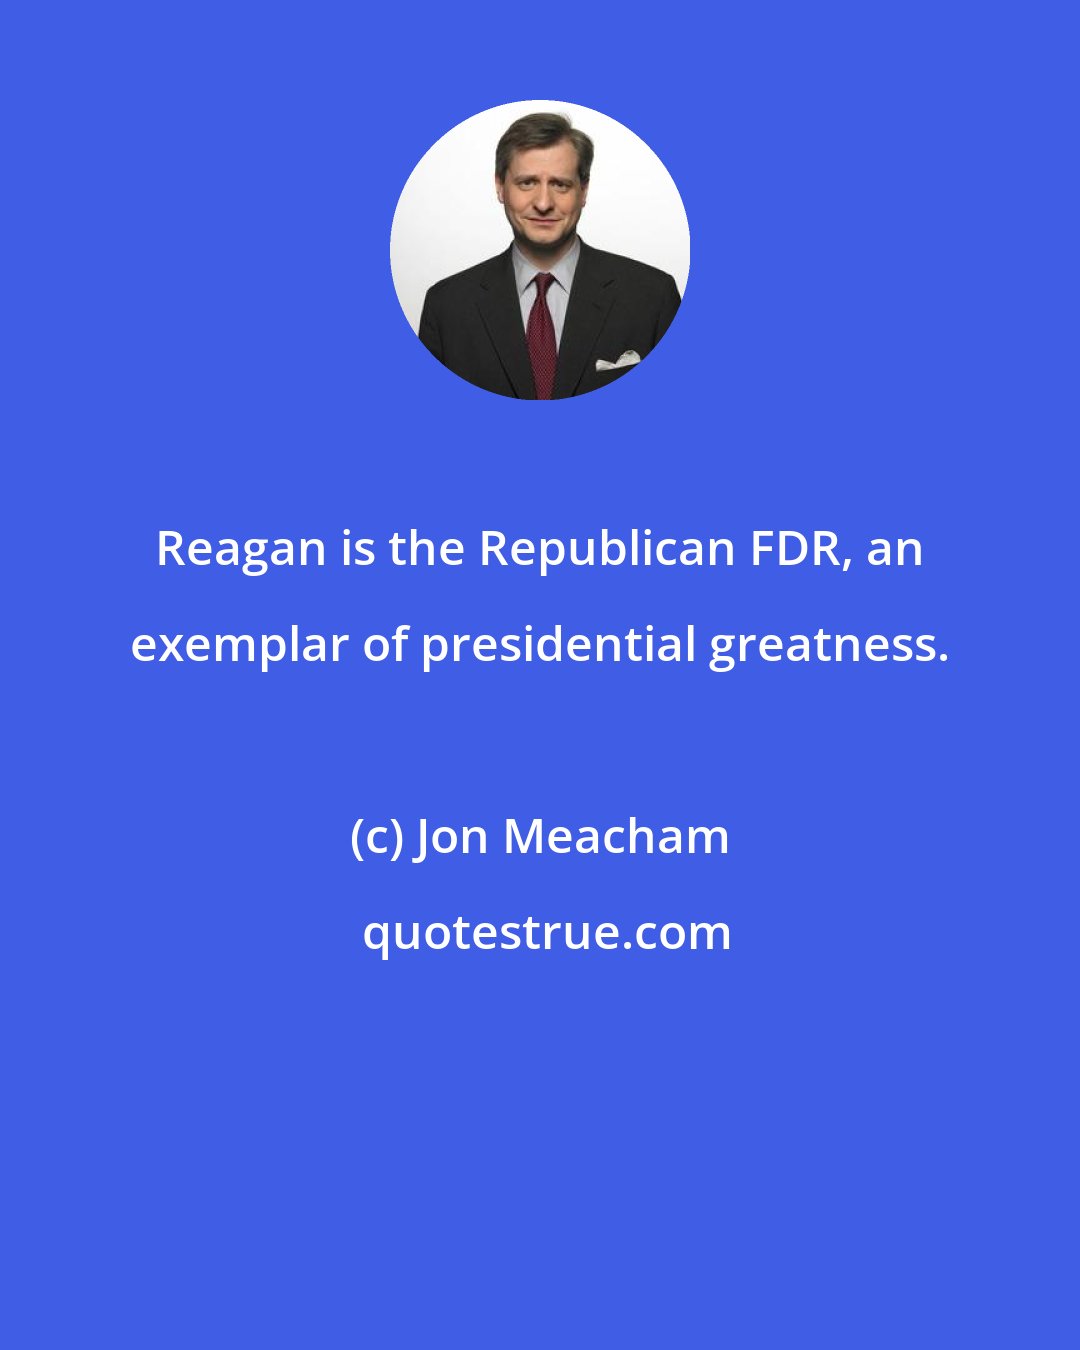 Jon Meacham: Reagan is the Republican FDR, an exemplar of presidential greatness.